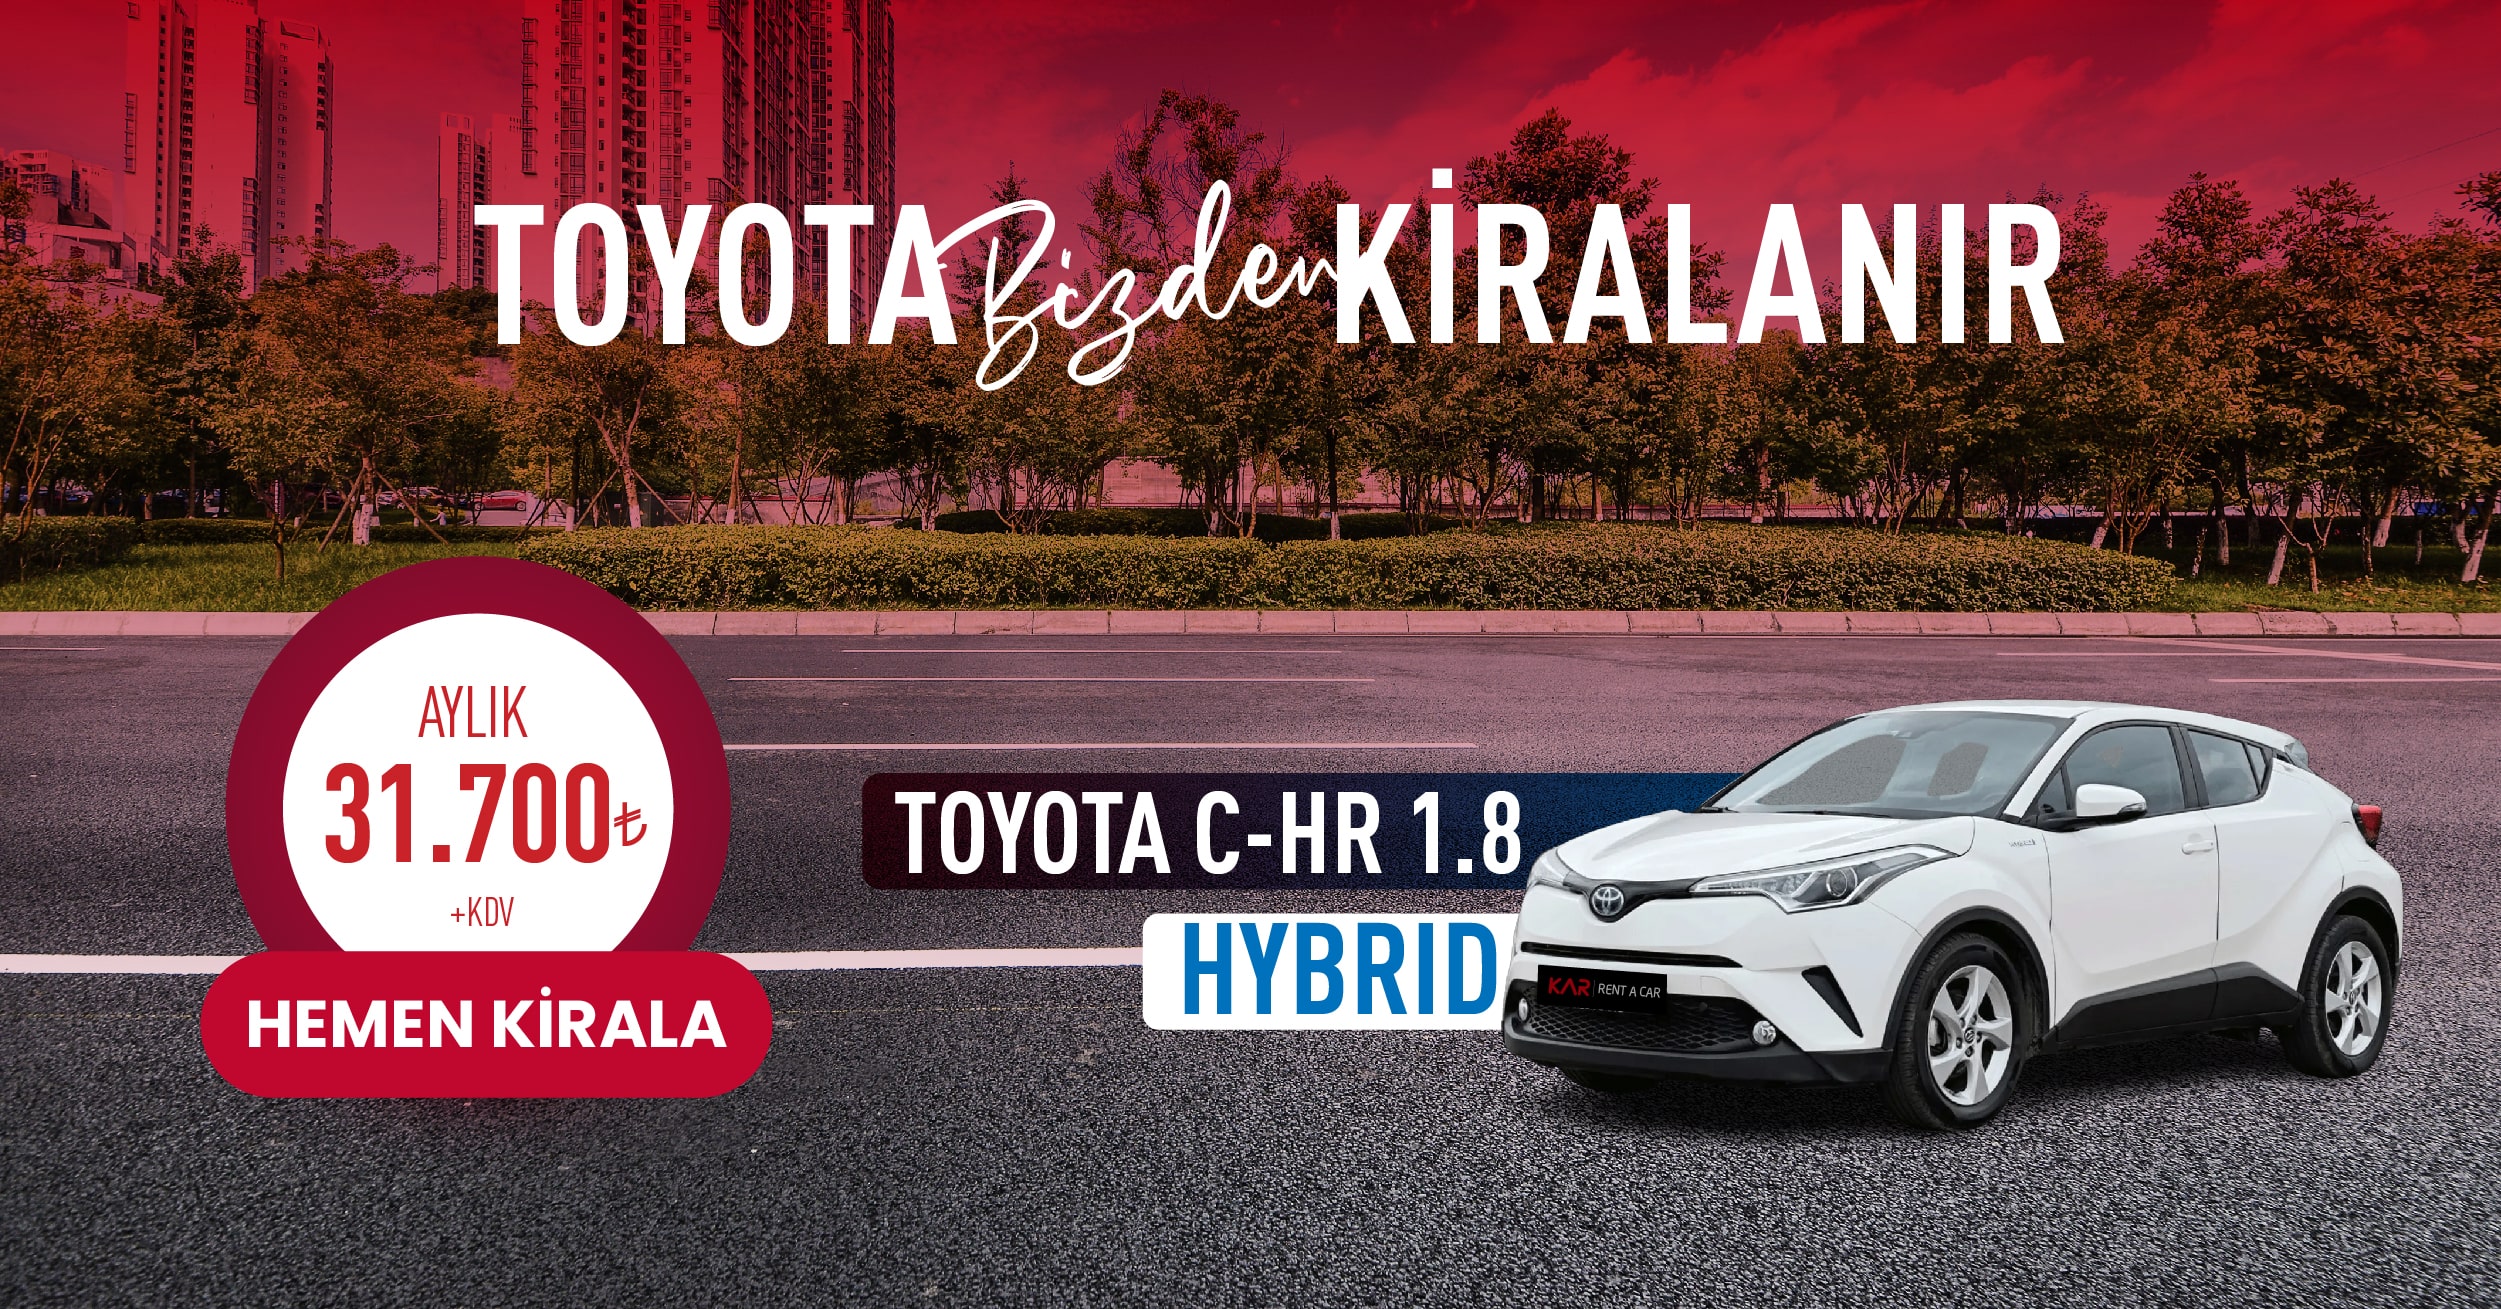 Toyota C-HR Kampanya